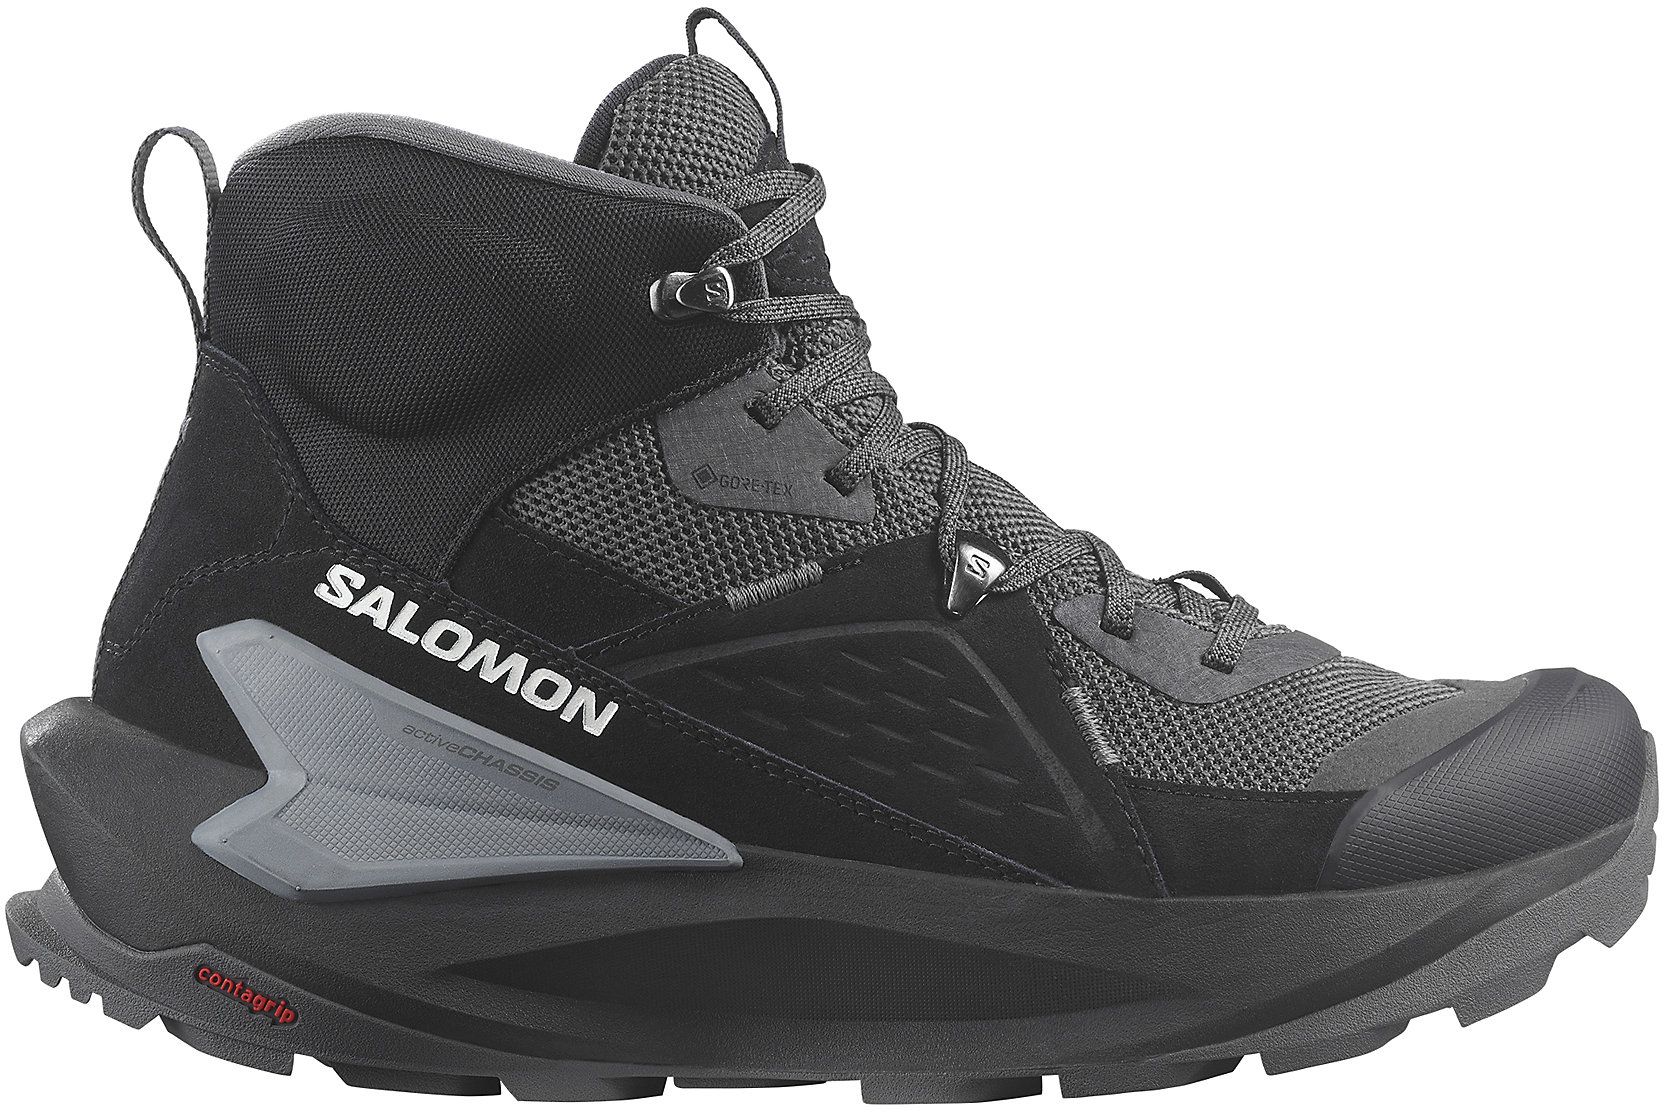 Photos - Trekking Shoes Salomon Men's Elixir Mid GTX Boot, Size 9, Black/Magnet/Quiet Shade 23SALM 